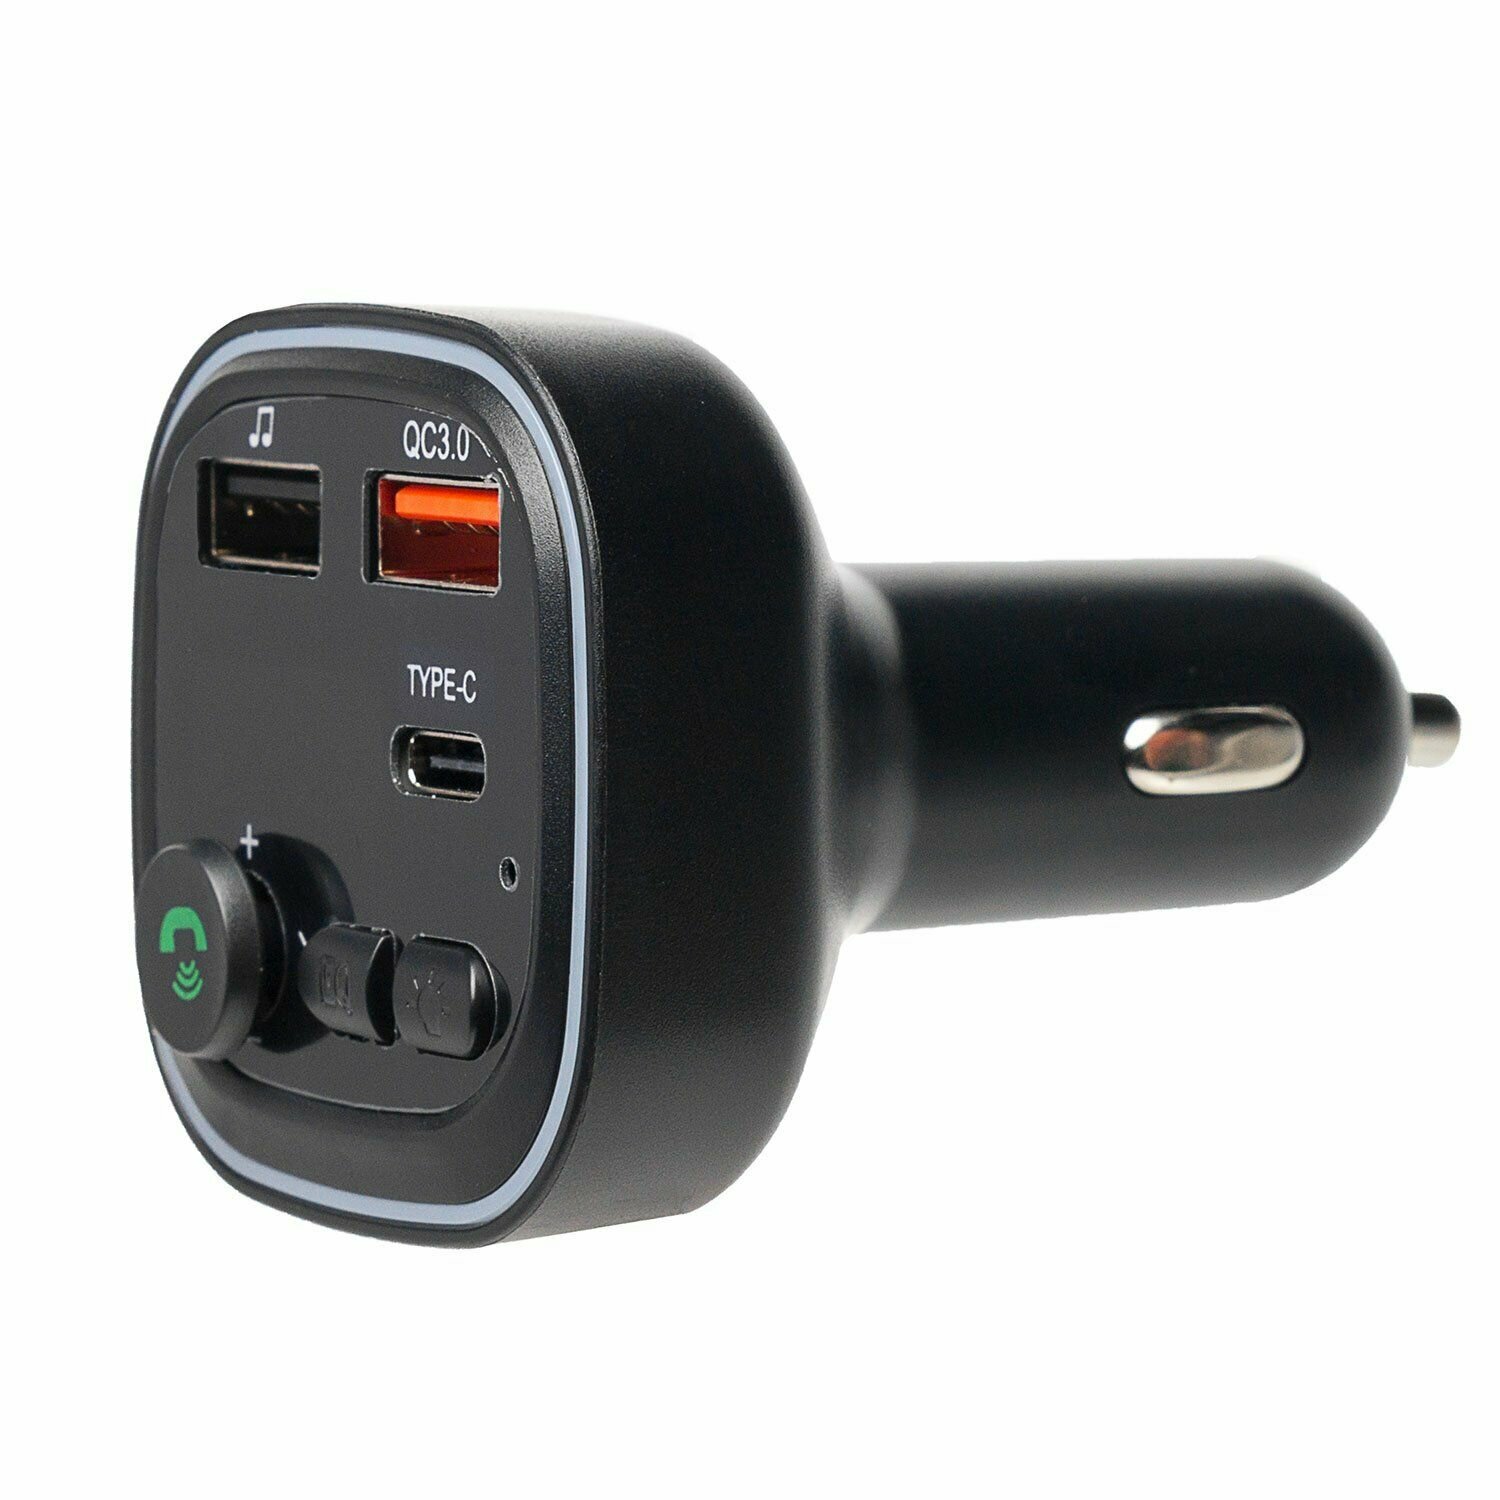 Гарнитура bluetooth для телефона, блютуз, адаптер aux для автомобиля, зарядка для авто, модулятор FM, трансмиттер, голосовое устройство